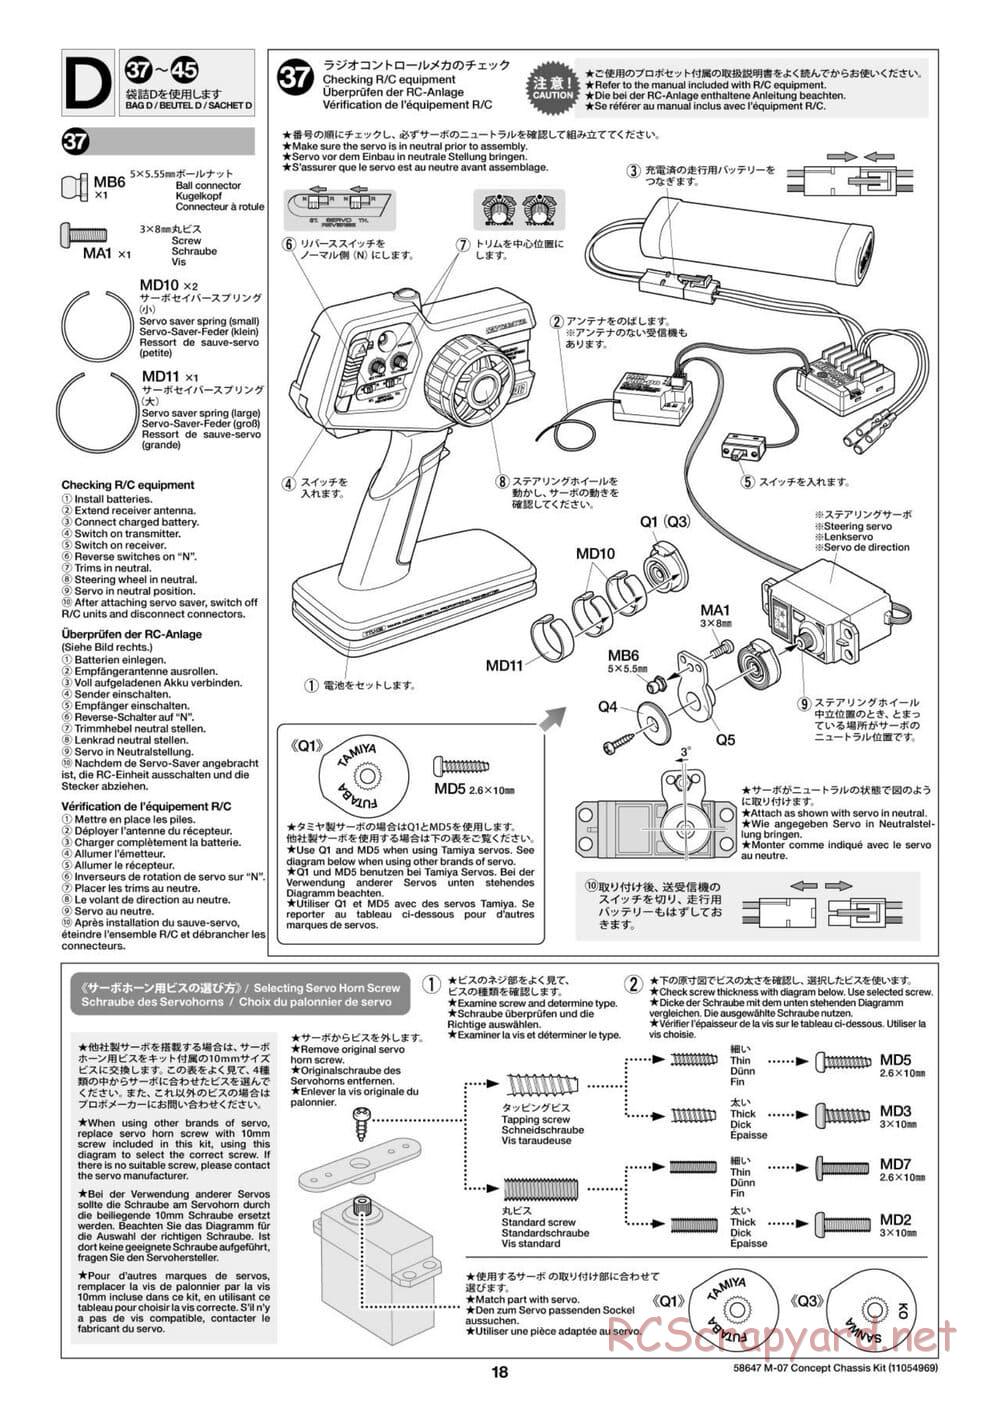 Tamiya - M-07 Concept Chassis - Manual - Page 18